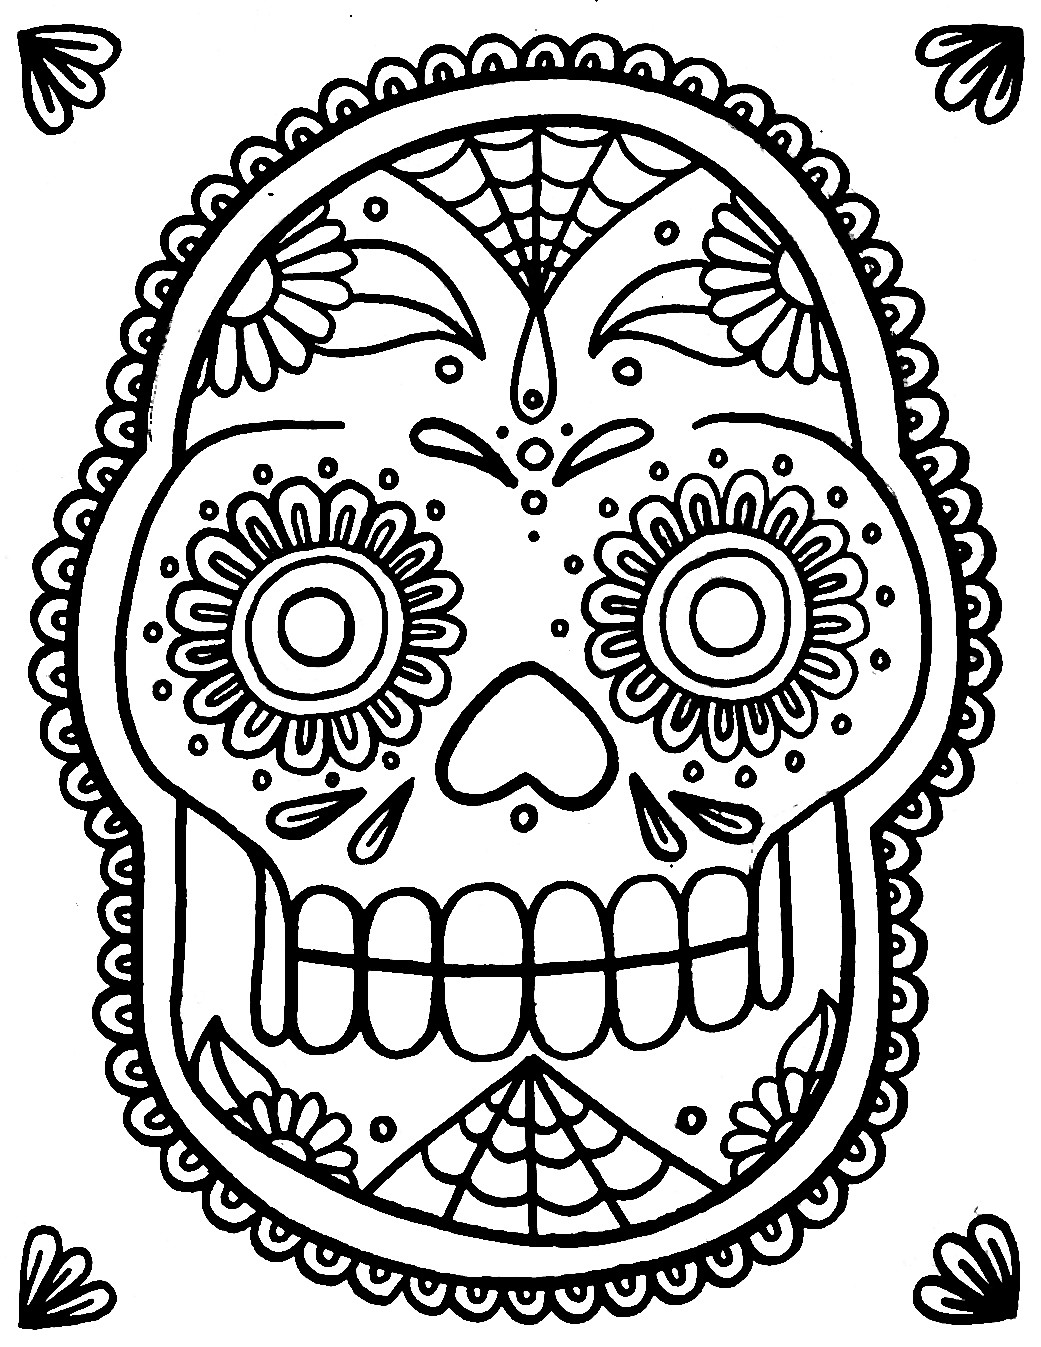 Printable Sugar Skulls Coloring Pages
 Yucca Flats N M Wenchkin s Coloring Pages Sugar Skull